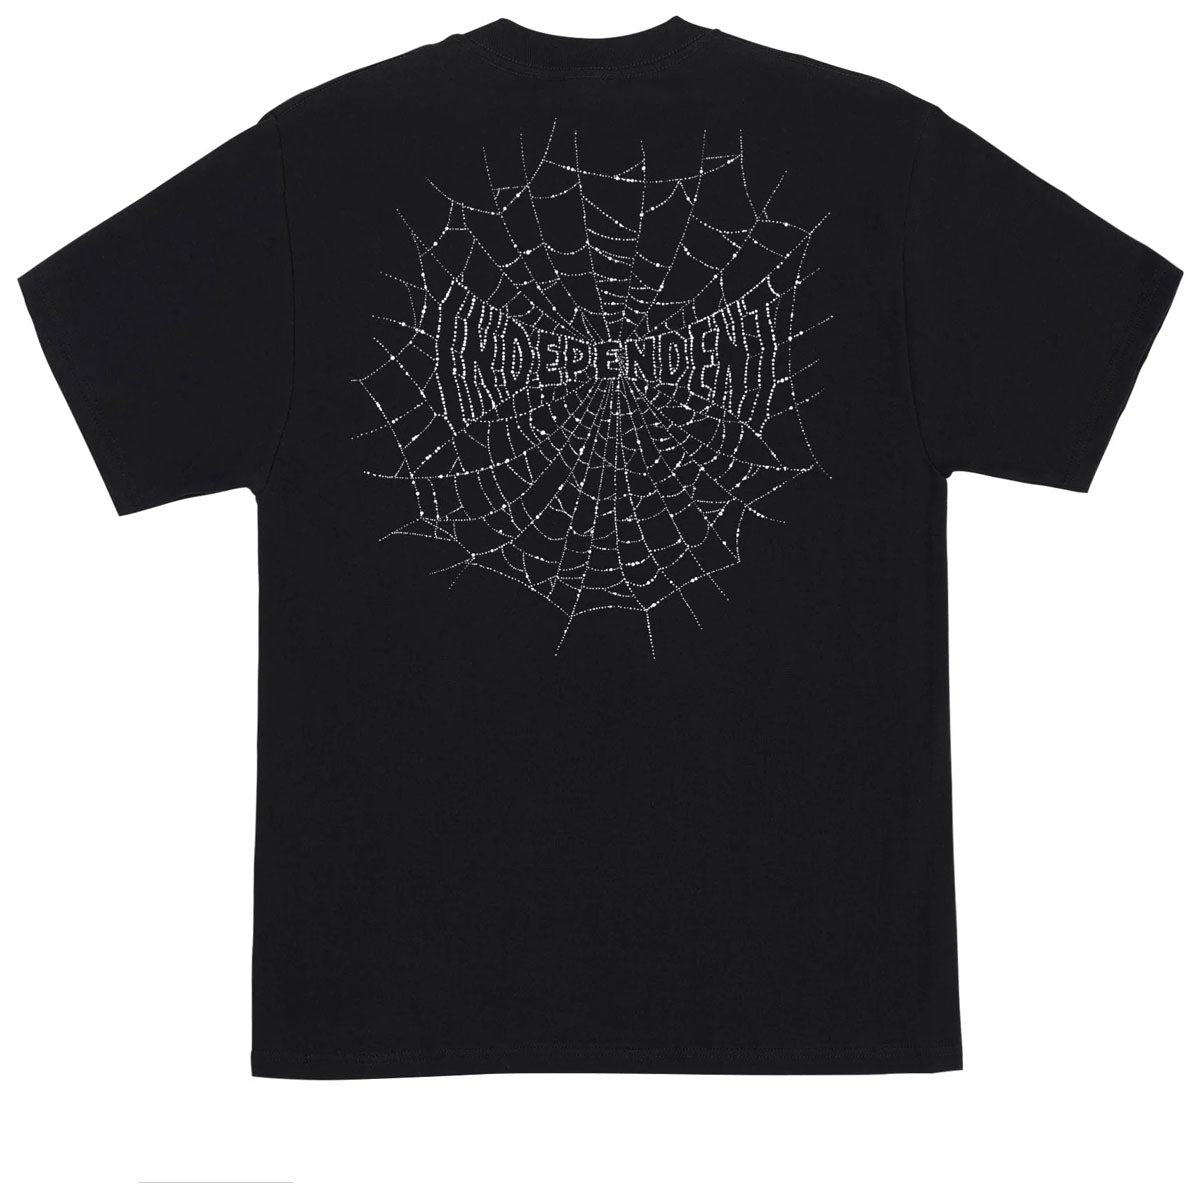 Independent Arachnid T-Shirt - Black image 1